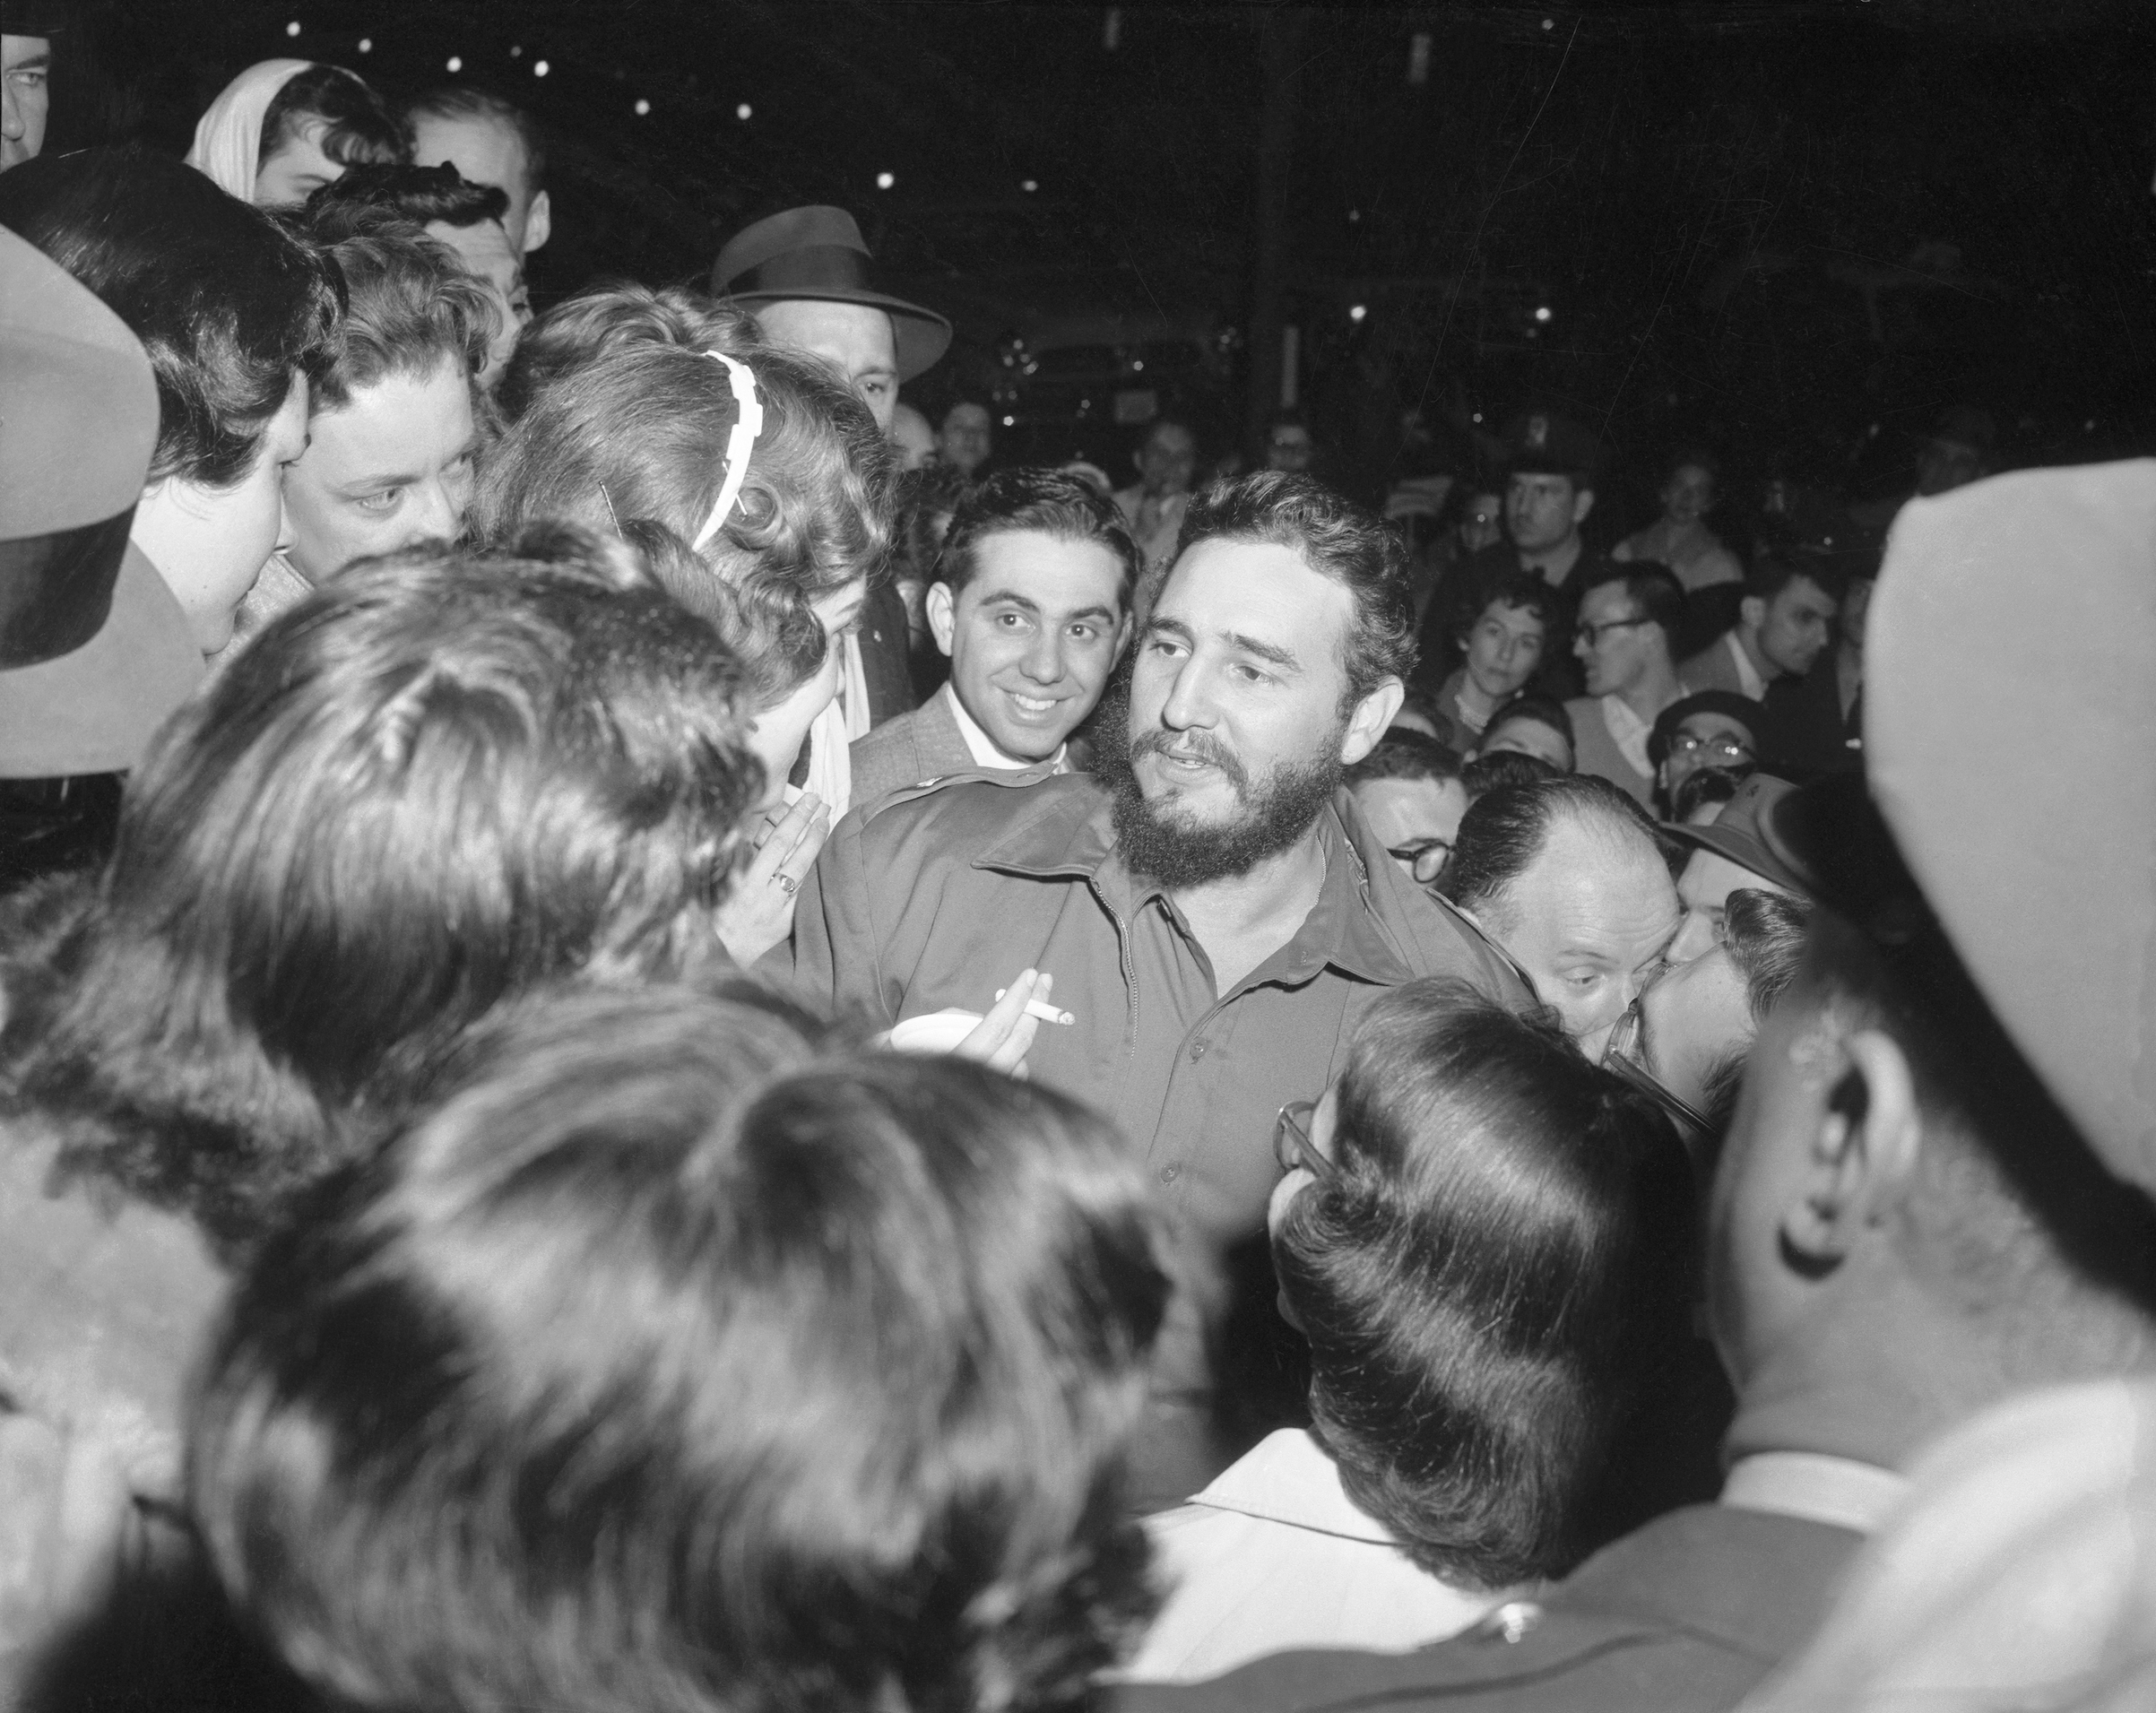 Fidel Castro Greeting Admirers